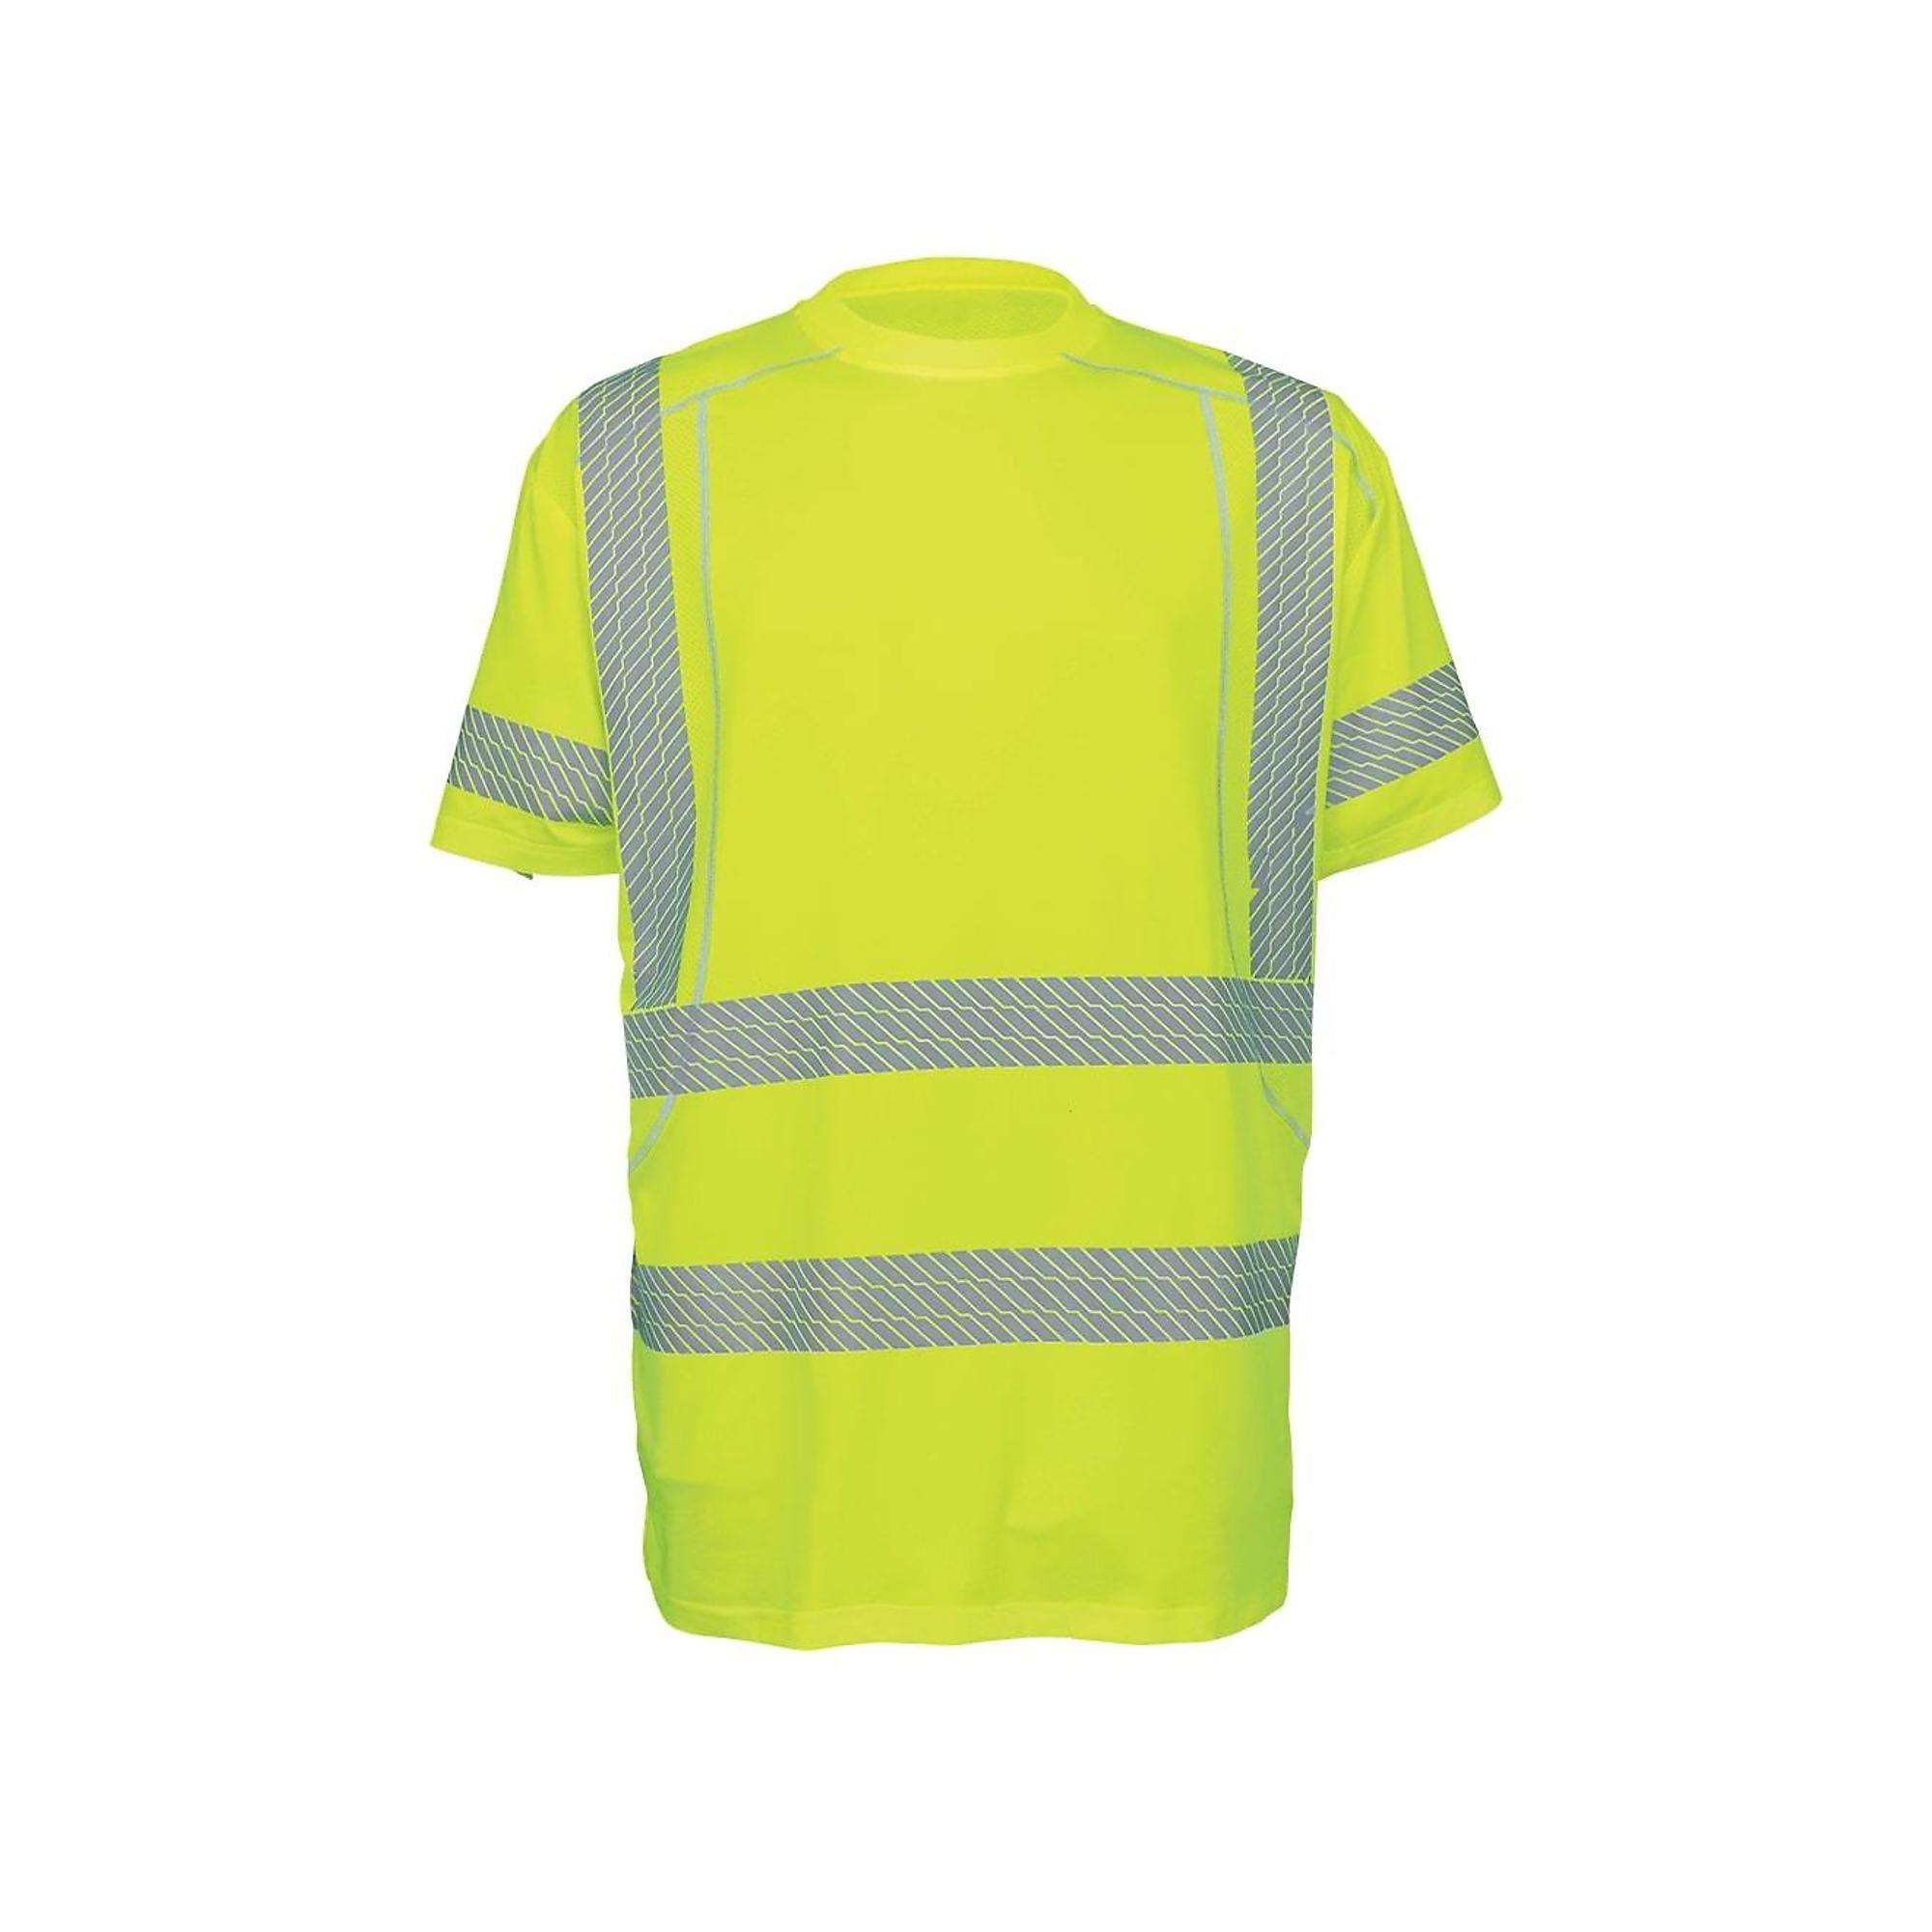 FrogWear, HV Yellow/Green, Class 3 Self-Wicking, Athletic Shirt, Size 3XL, Model GLO-205-3XL